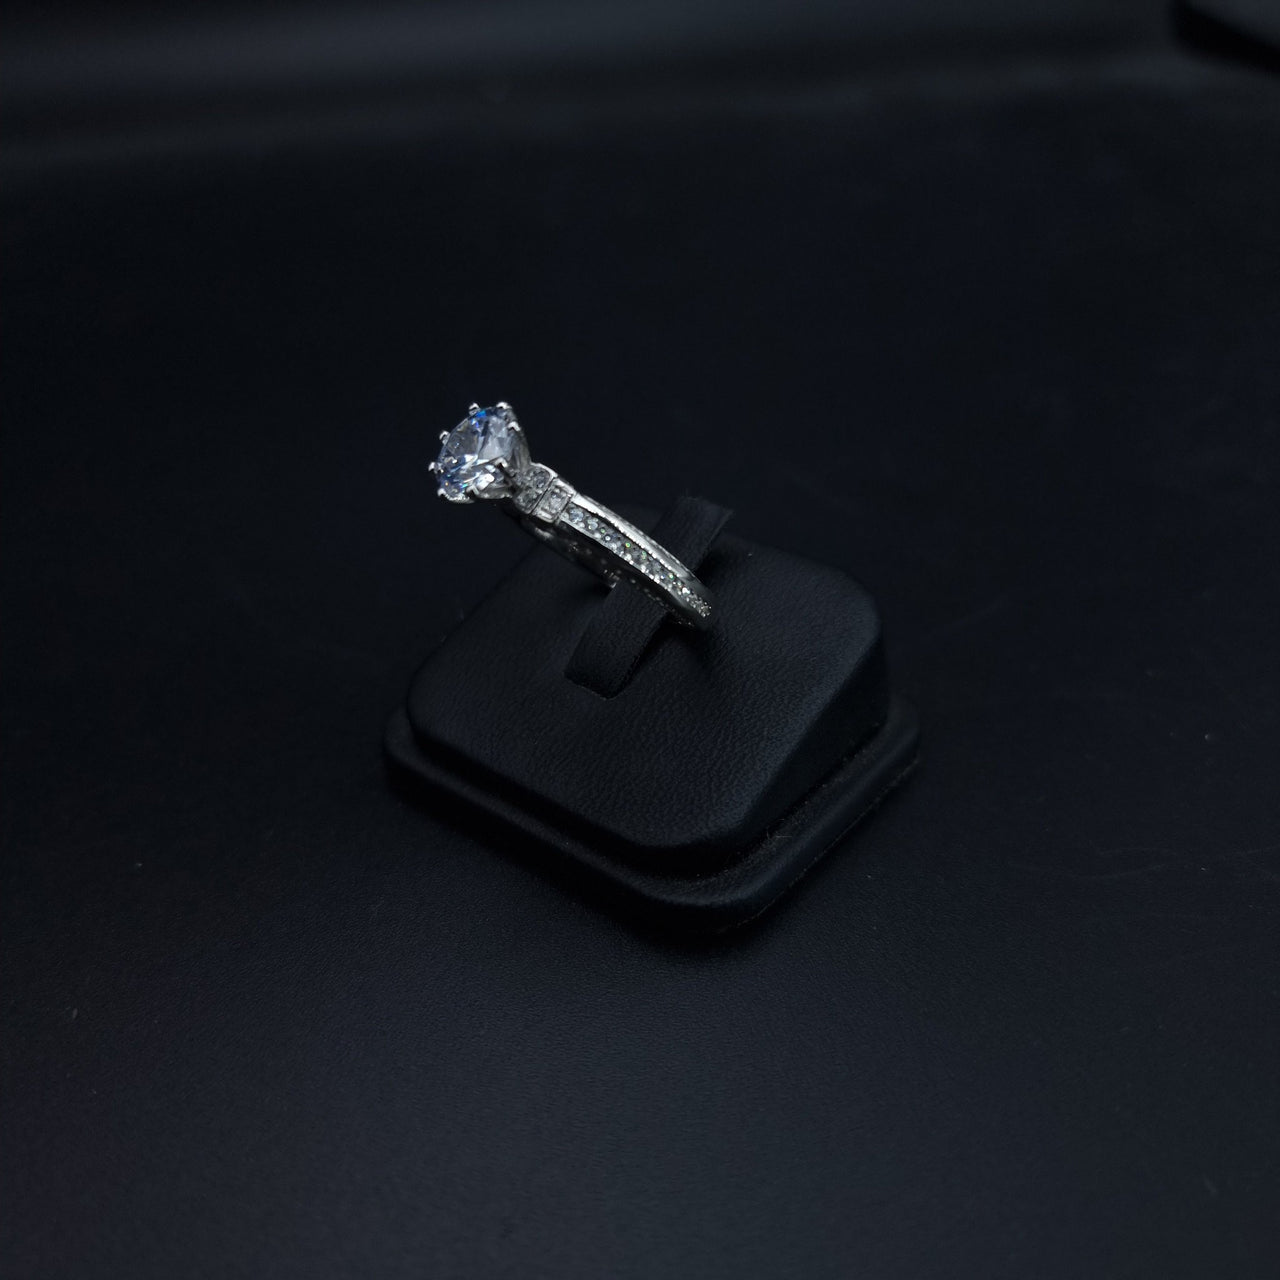 Wedding Ring With Central Zircon Stone SLPRG0148